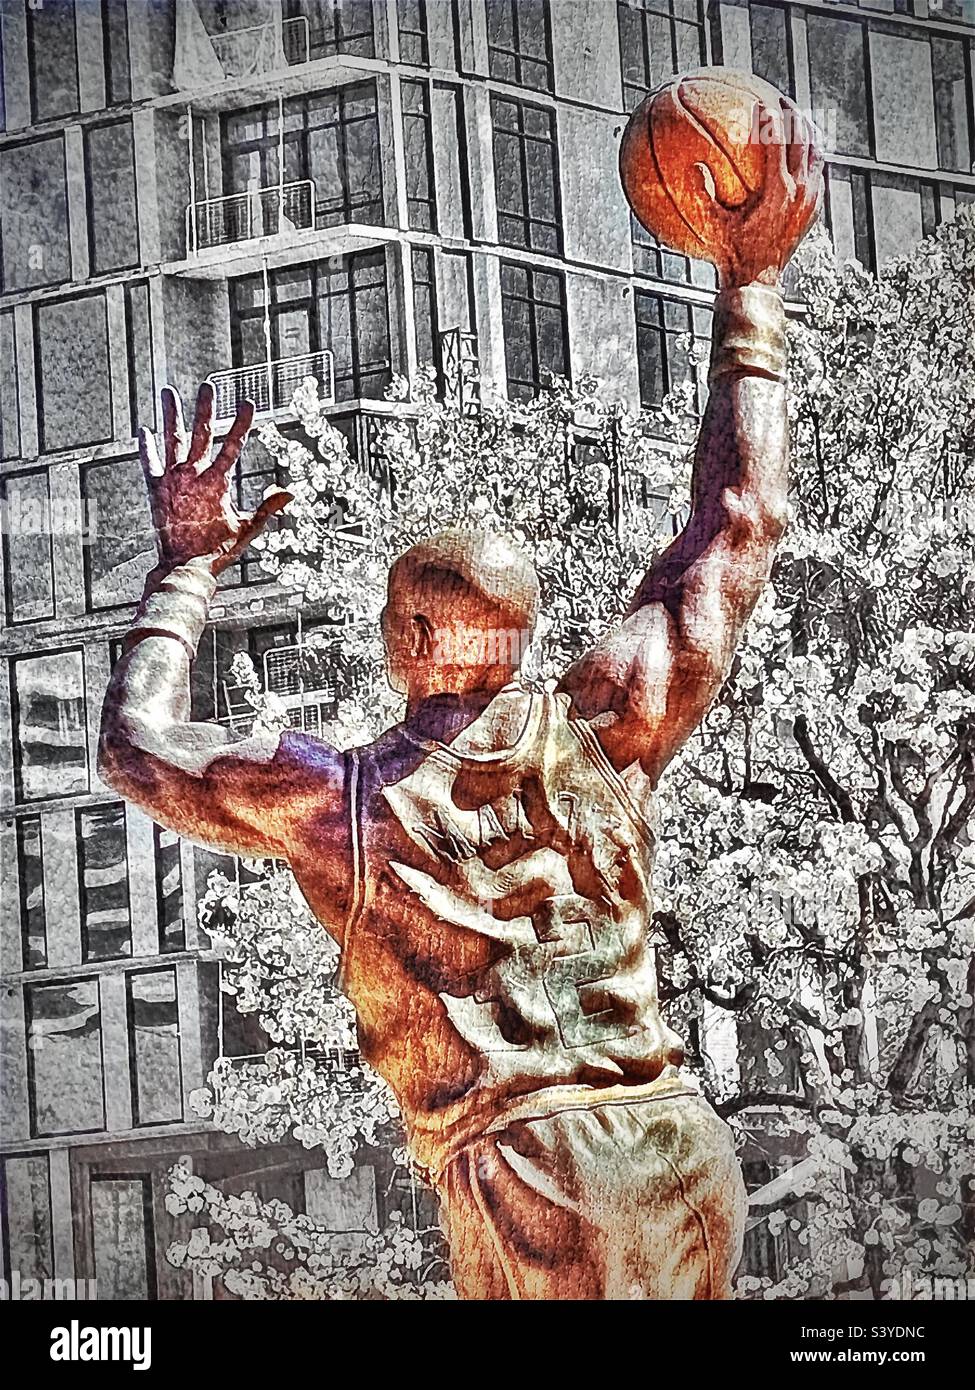 Karl Malone Utah Jazz  Basketball art, Nba basketball art, Nba art